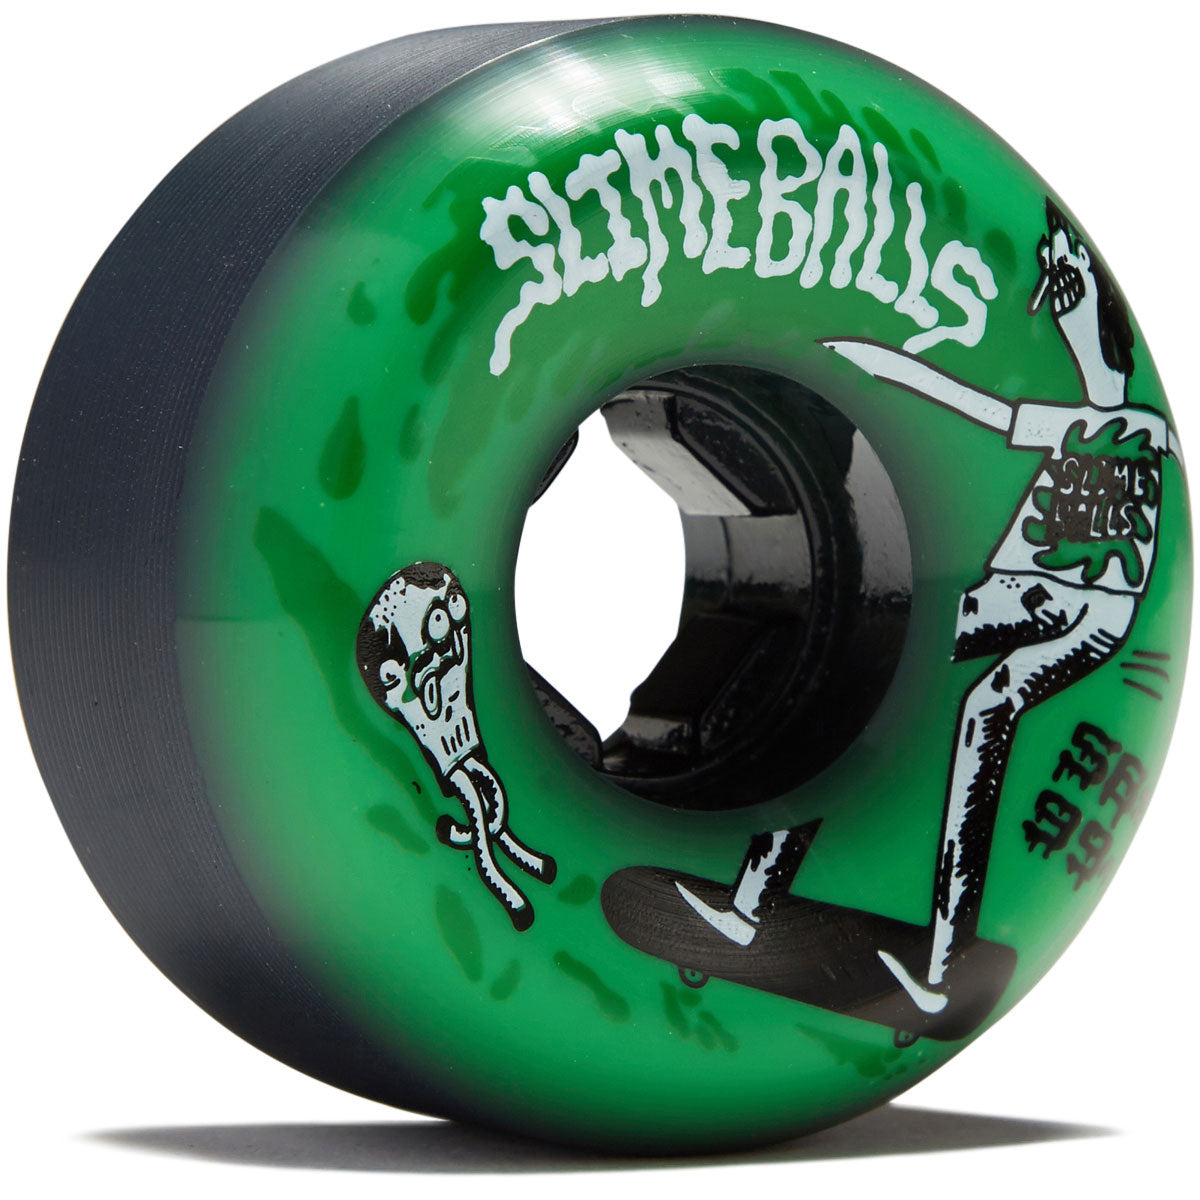 Slime Balls Jay Howell Speed Balls 99a Skateboard Wheels - Green - 56mm image 1